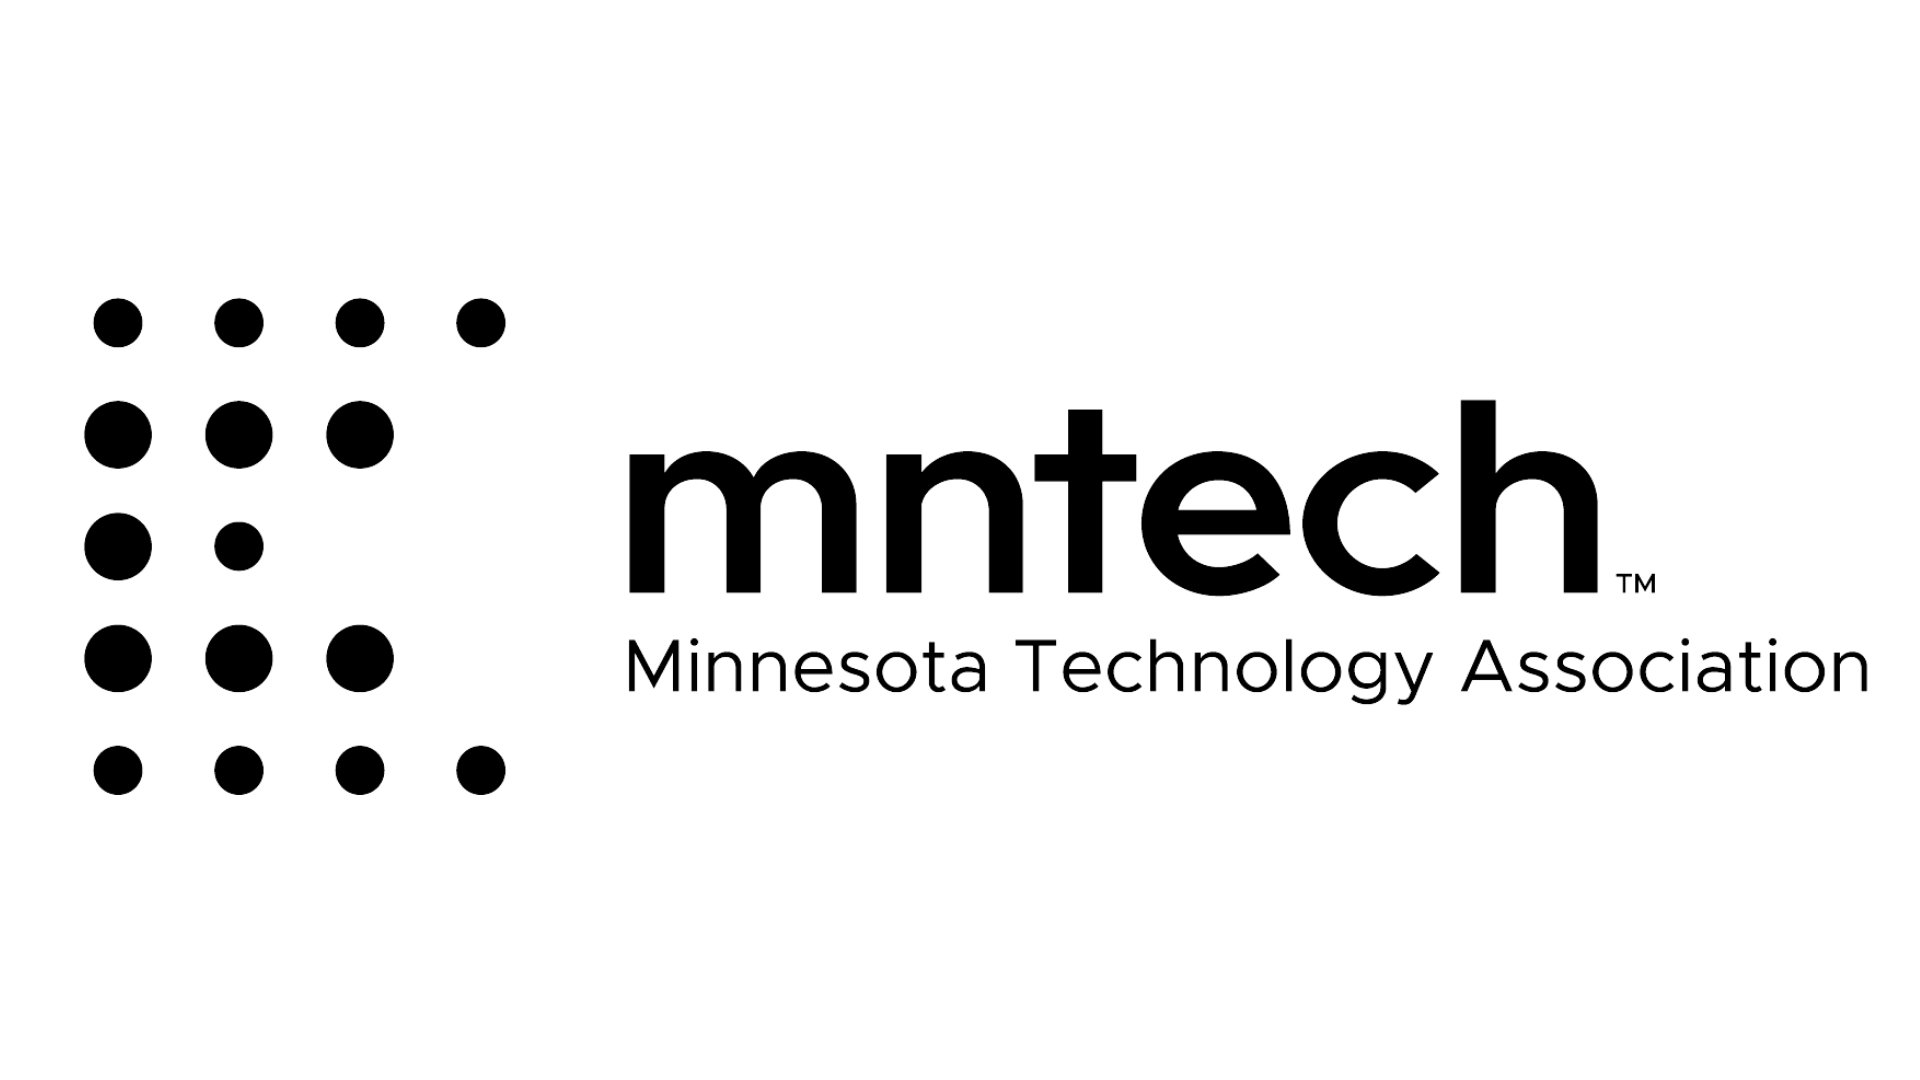 Minnesota Technology Association logo